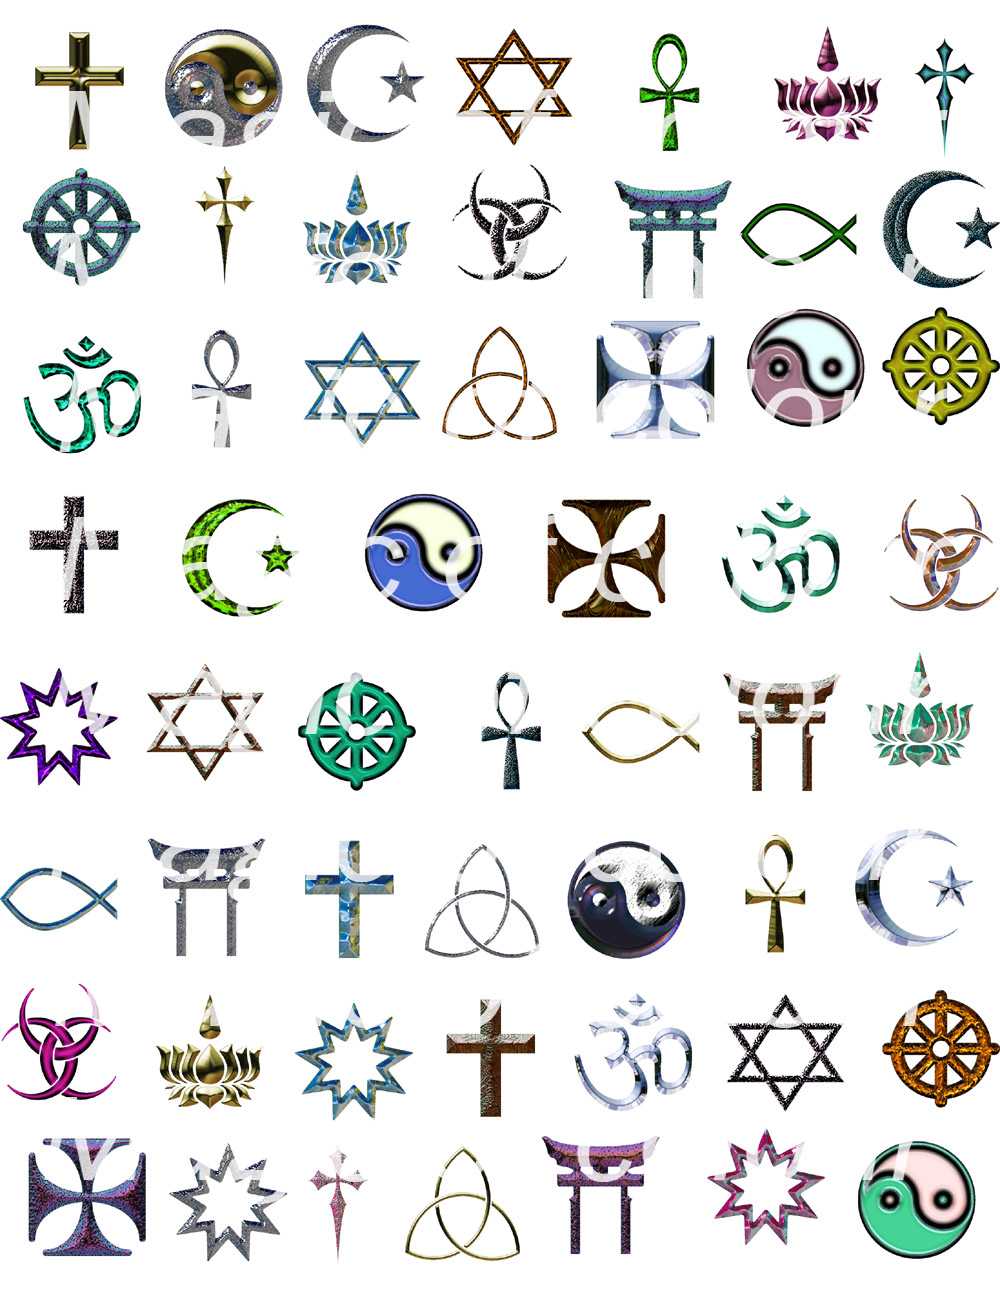 Символы мира - peace symbols - qaz.wiki